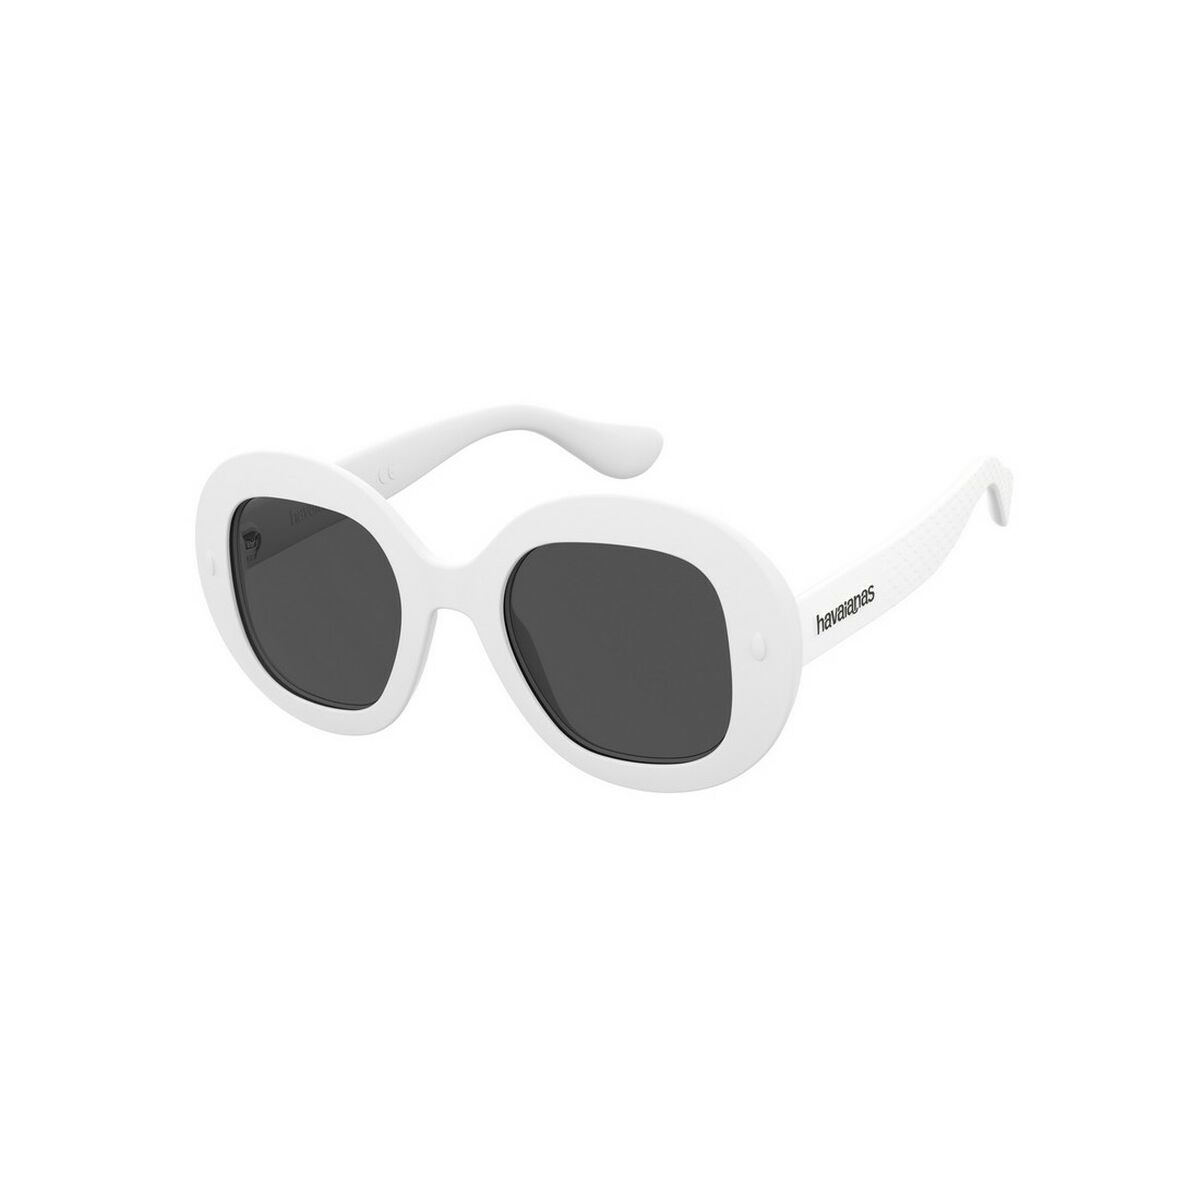 Kaufe Damensonnenbrille Havaianas LENCOIS-VK6 Ø 50 mm bei AWK Flagship um € 49.00